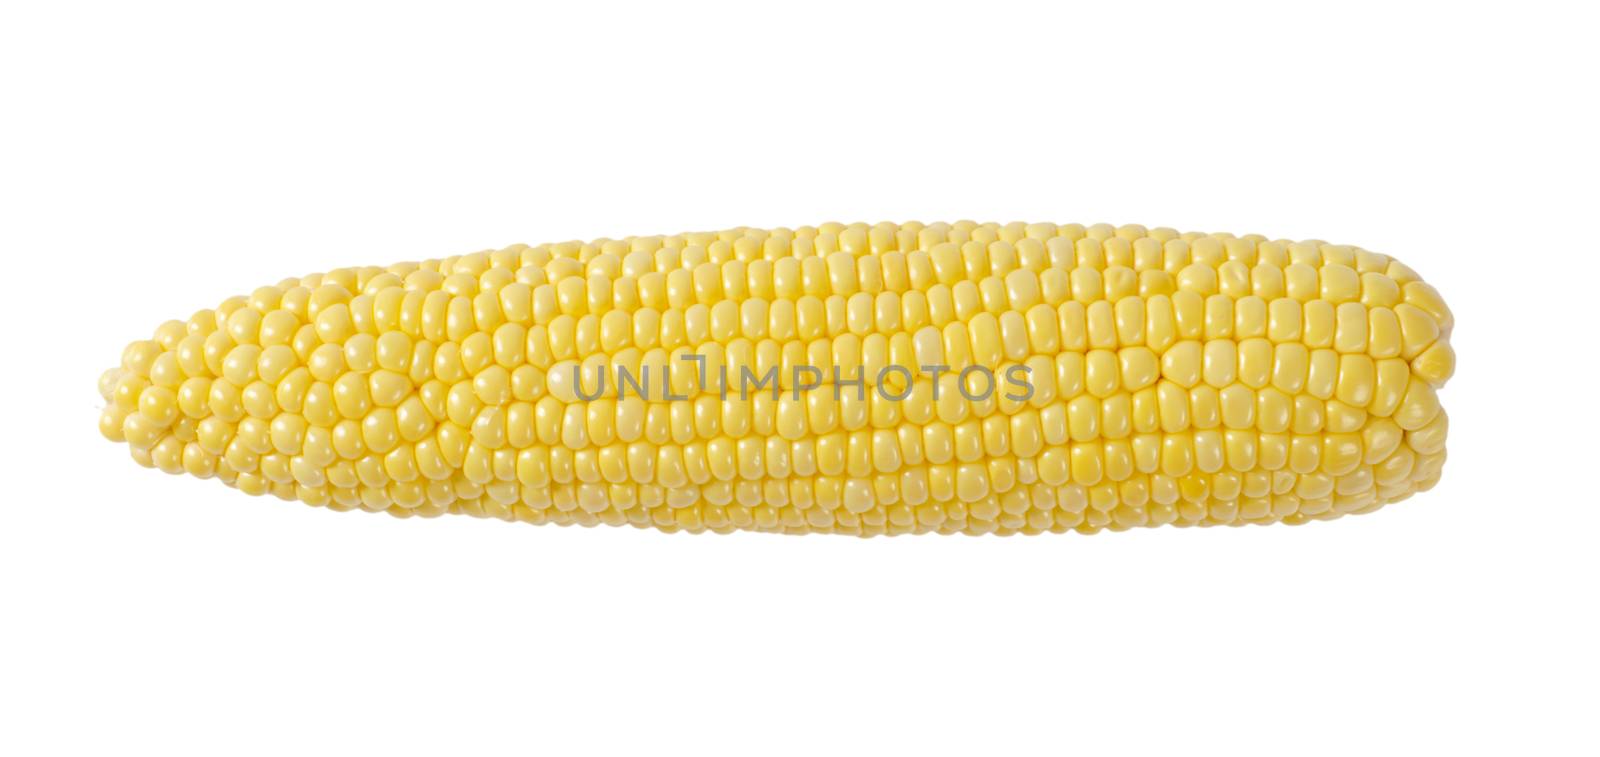 ripe corn cob by Digifoodstock